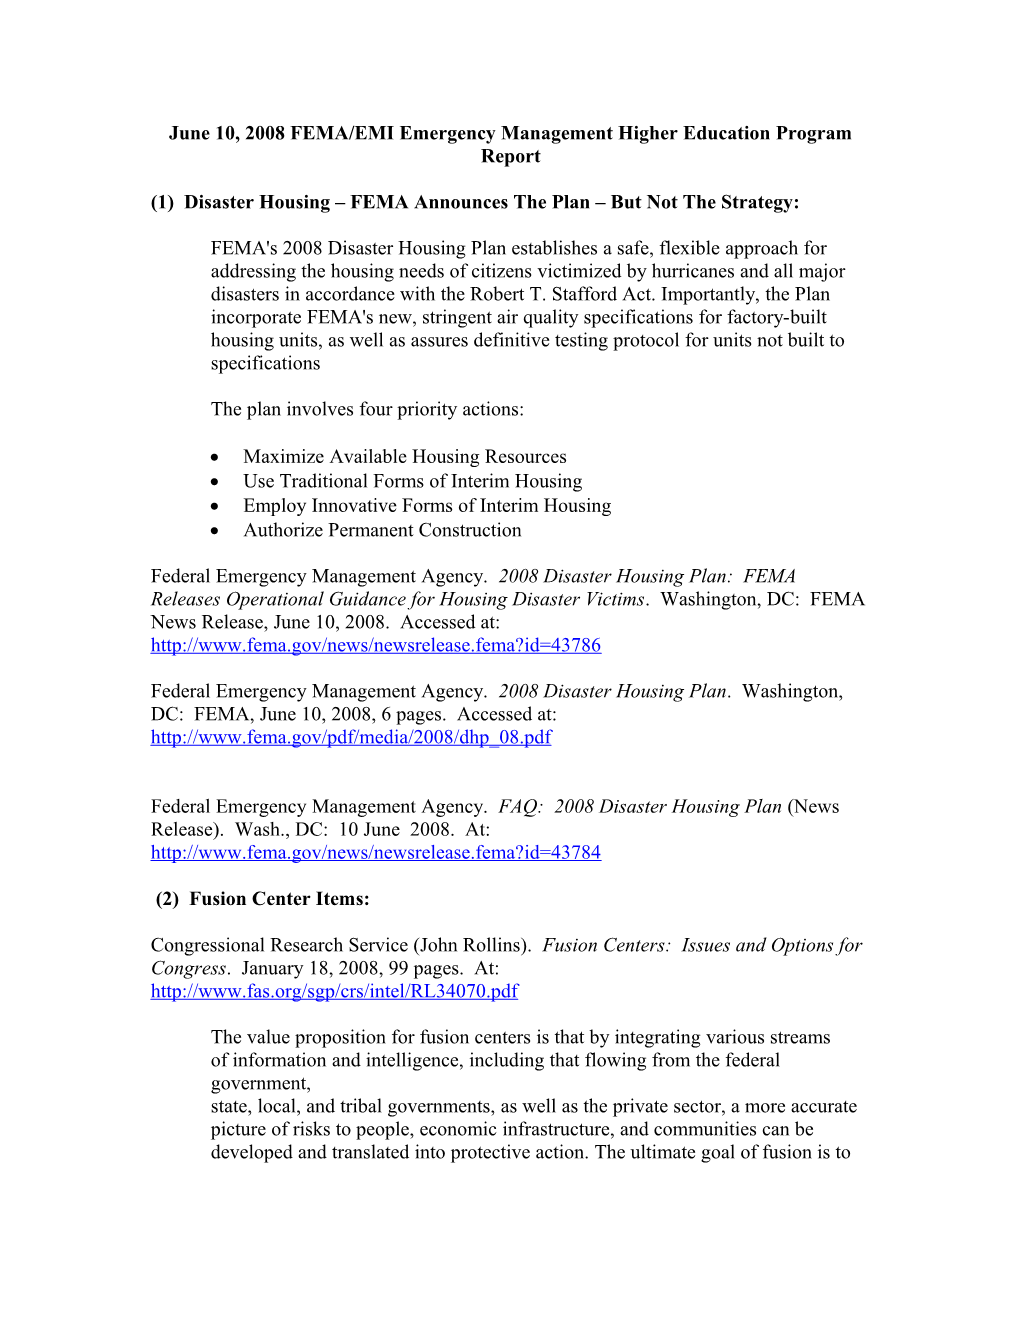 June 10, 2008 FEMA/EMI Emergency Management Higher Education Program Report